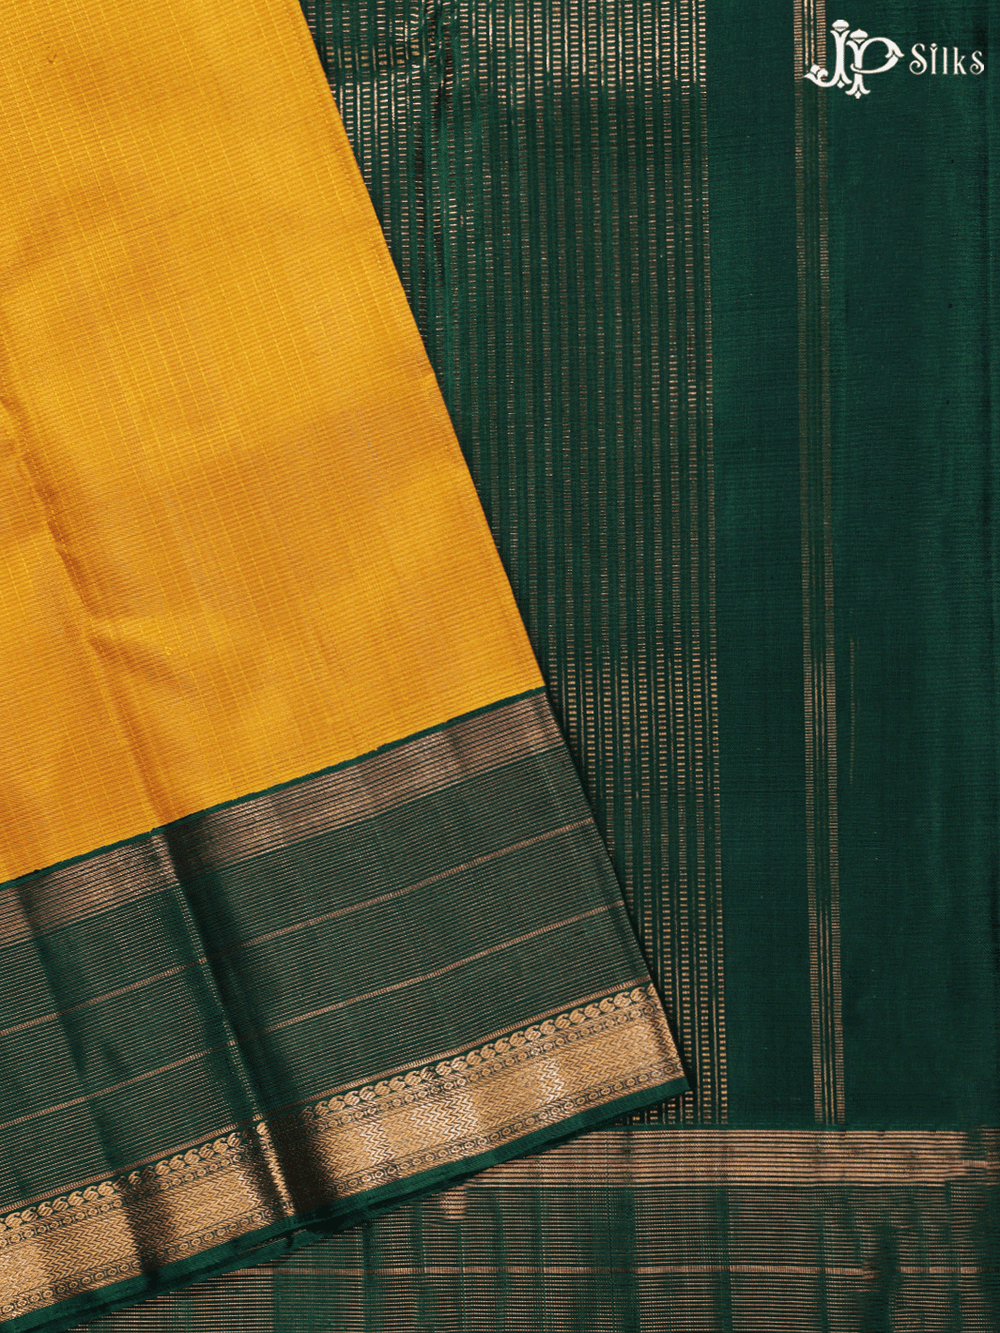 Lemon Yellow and Bottle Green Kanchipuram Silk Saree - E5215 - View 1